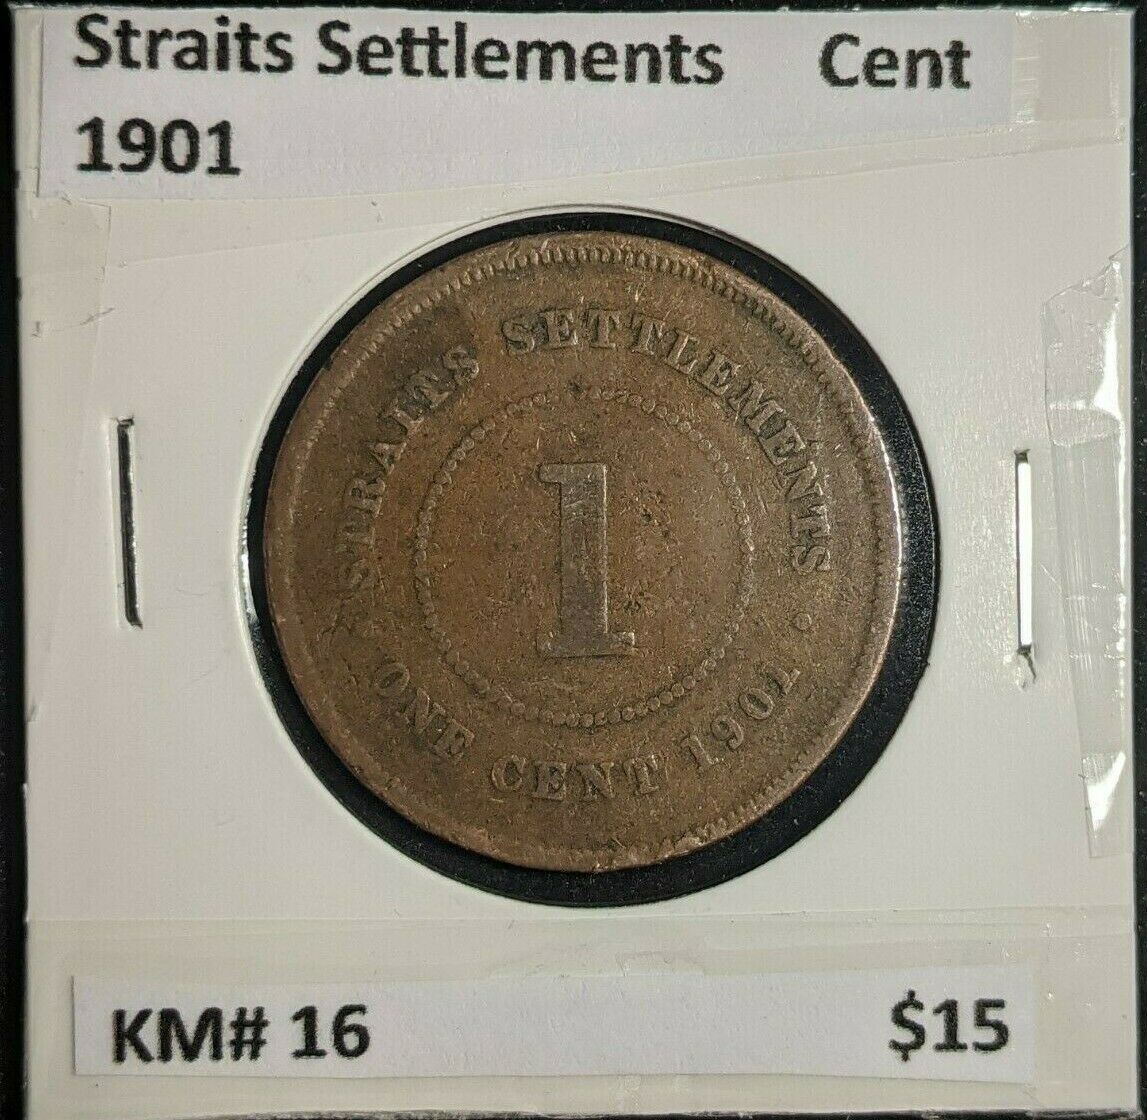 Straits Settlements 1901 Cent KM# 16 #1974